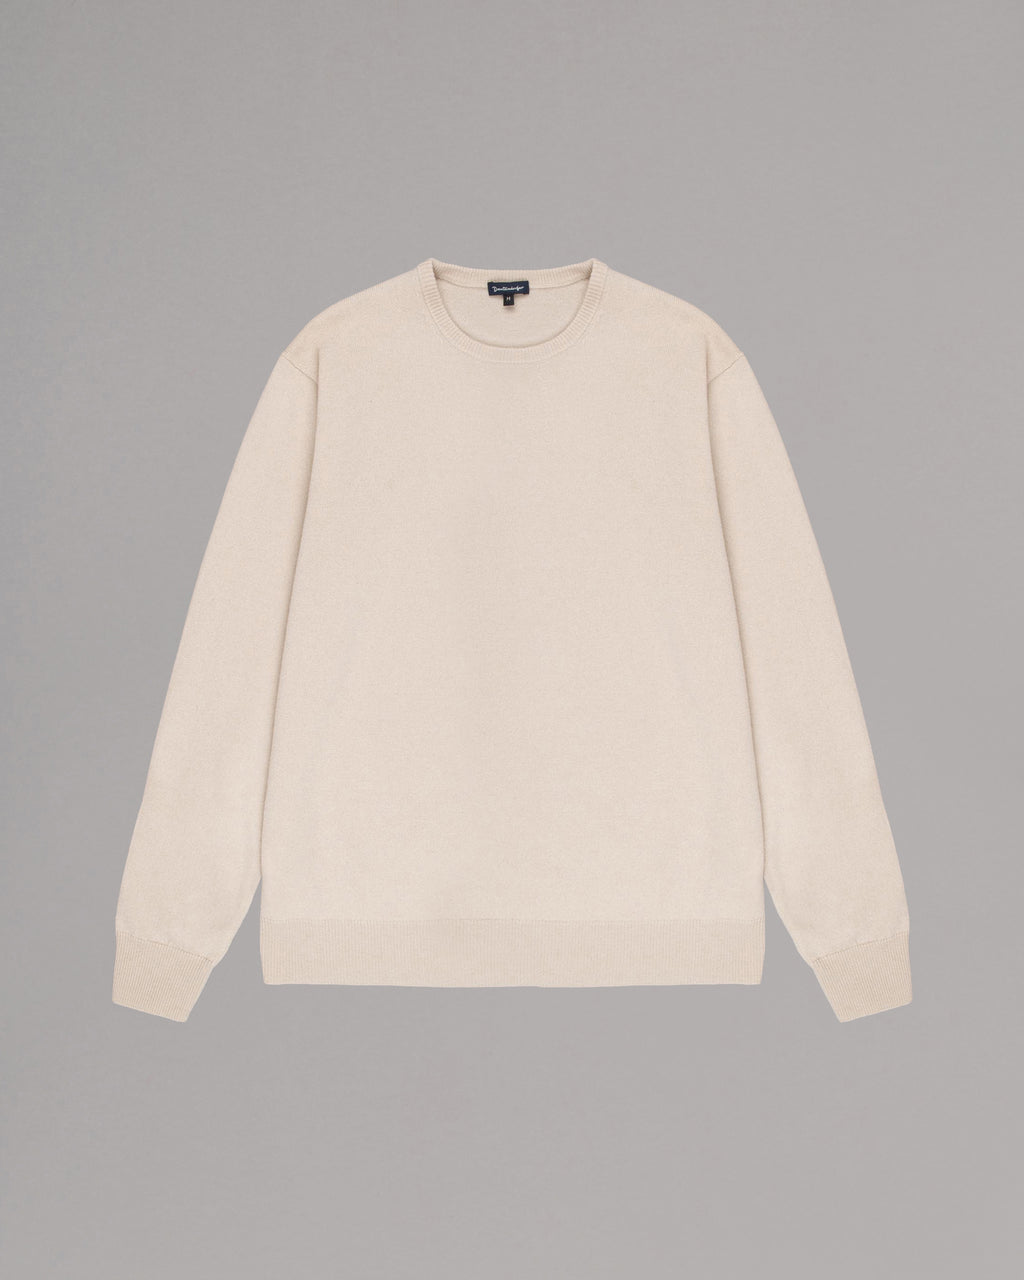 Cashmere Sweater by Dantendorfer | Dantendorfer Online Shop